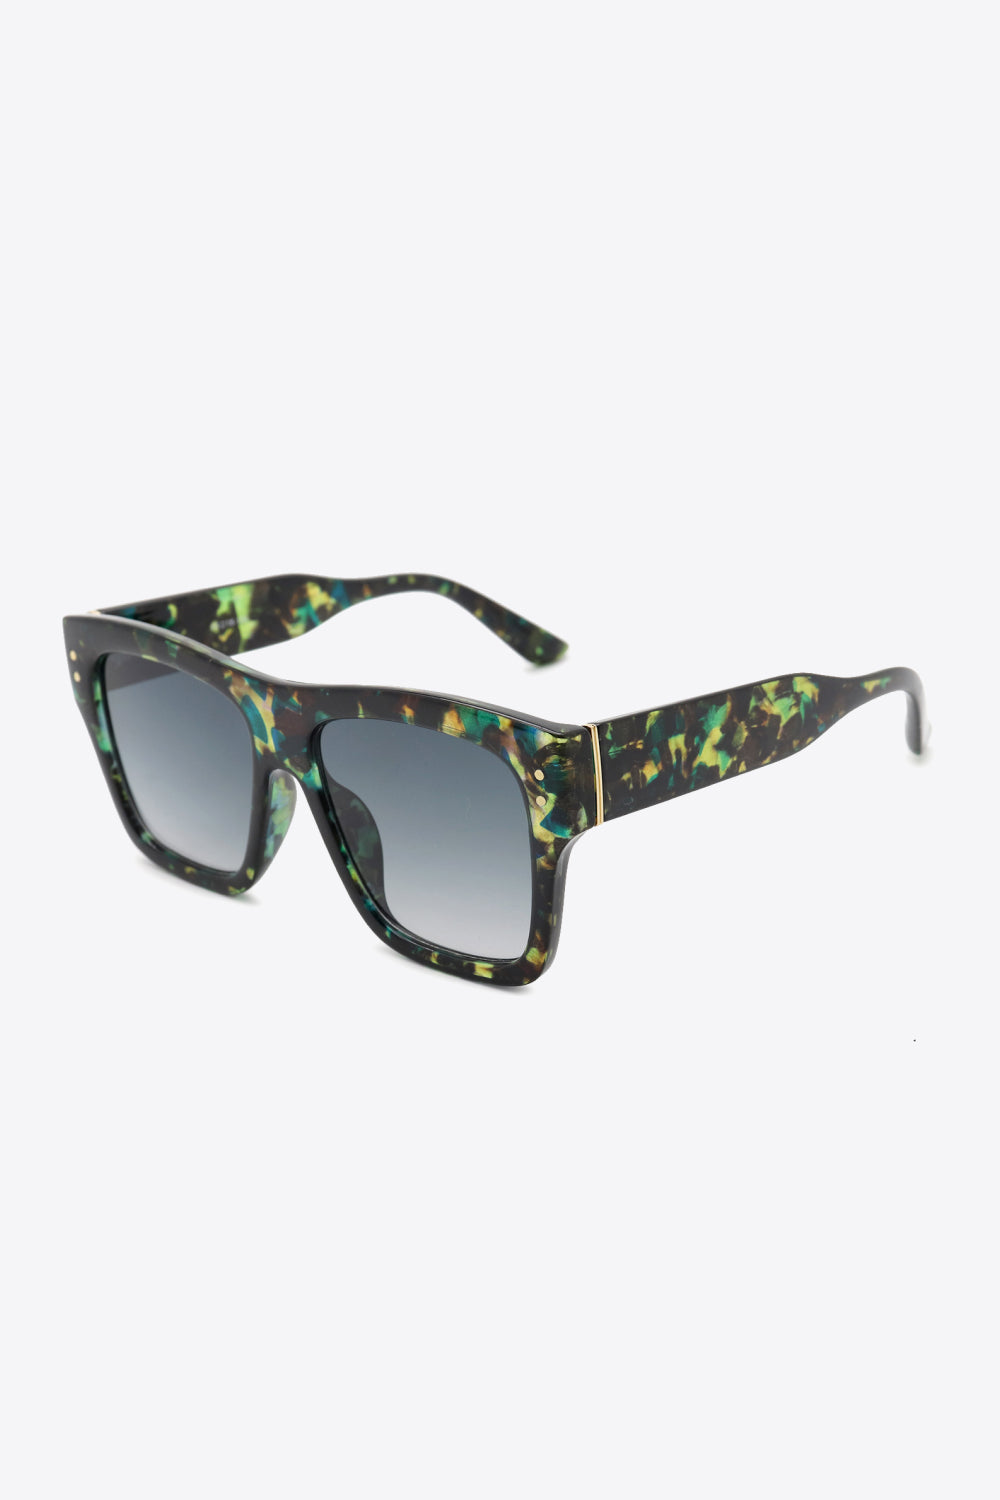 UV400 Patterned Polycarbonate Square Sunglasses - BEAUTY COSMOTICS SHOP